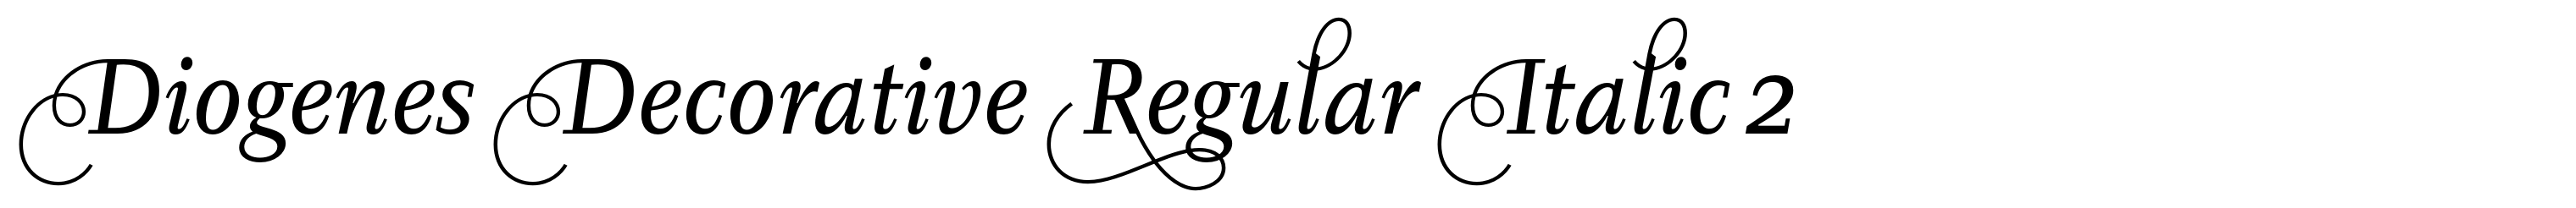 Diogenes Decorative Regular Italic 2